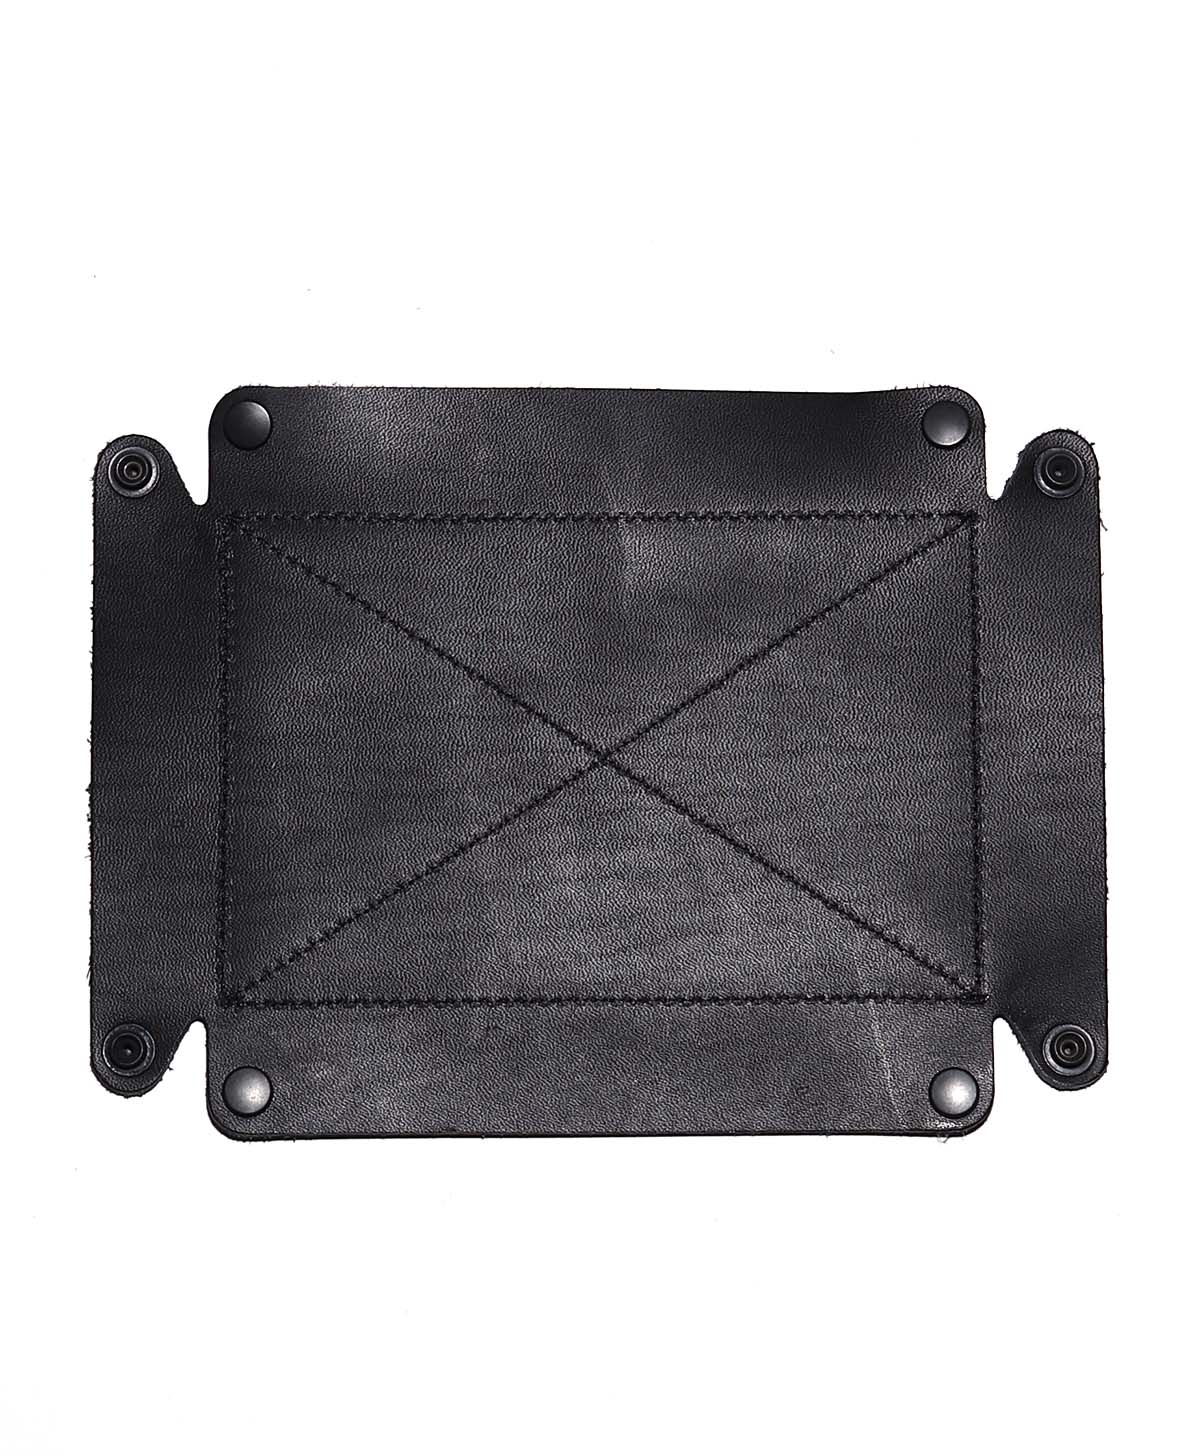 KM / Leather Tray / Black